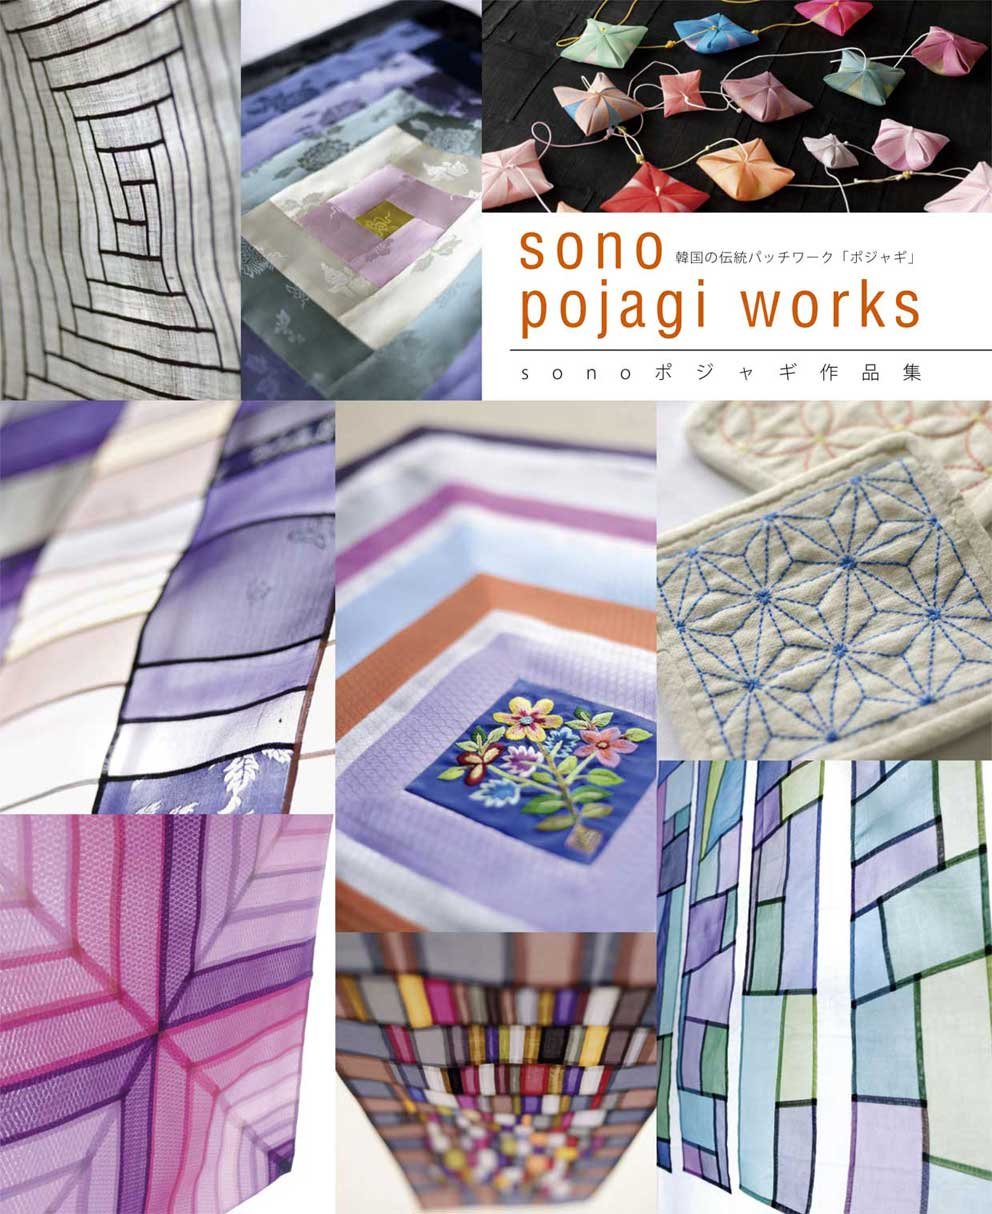 Pojagi works Korean traditional patchwork